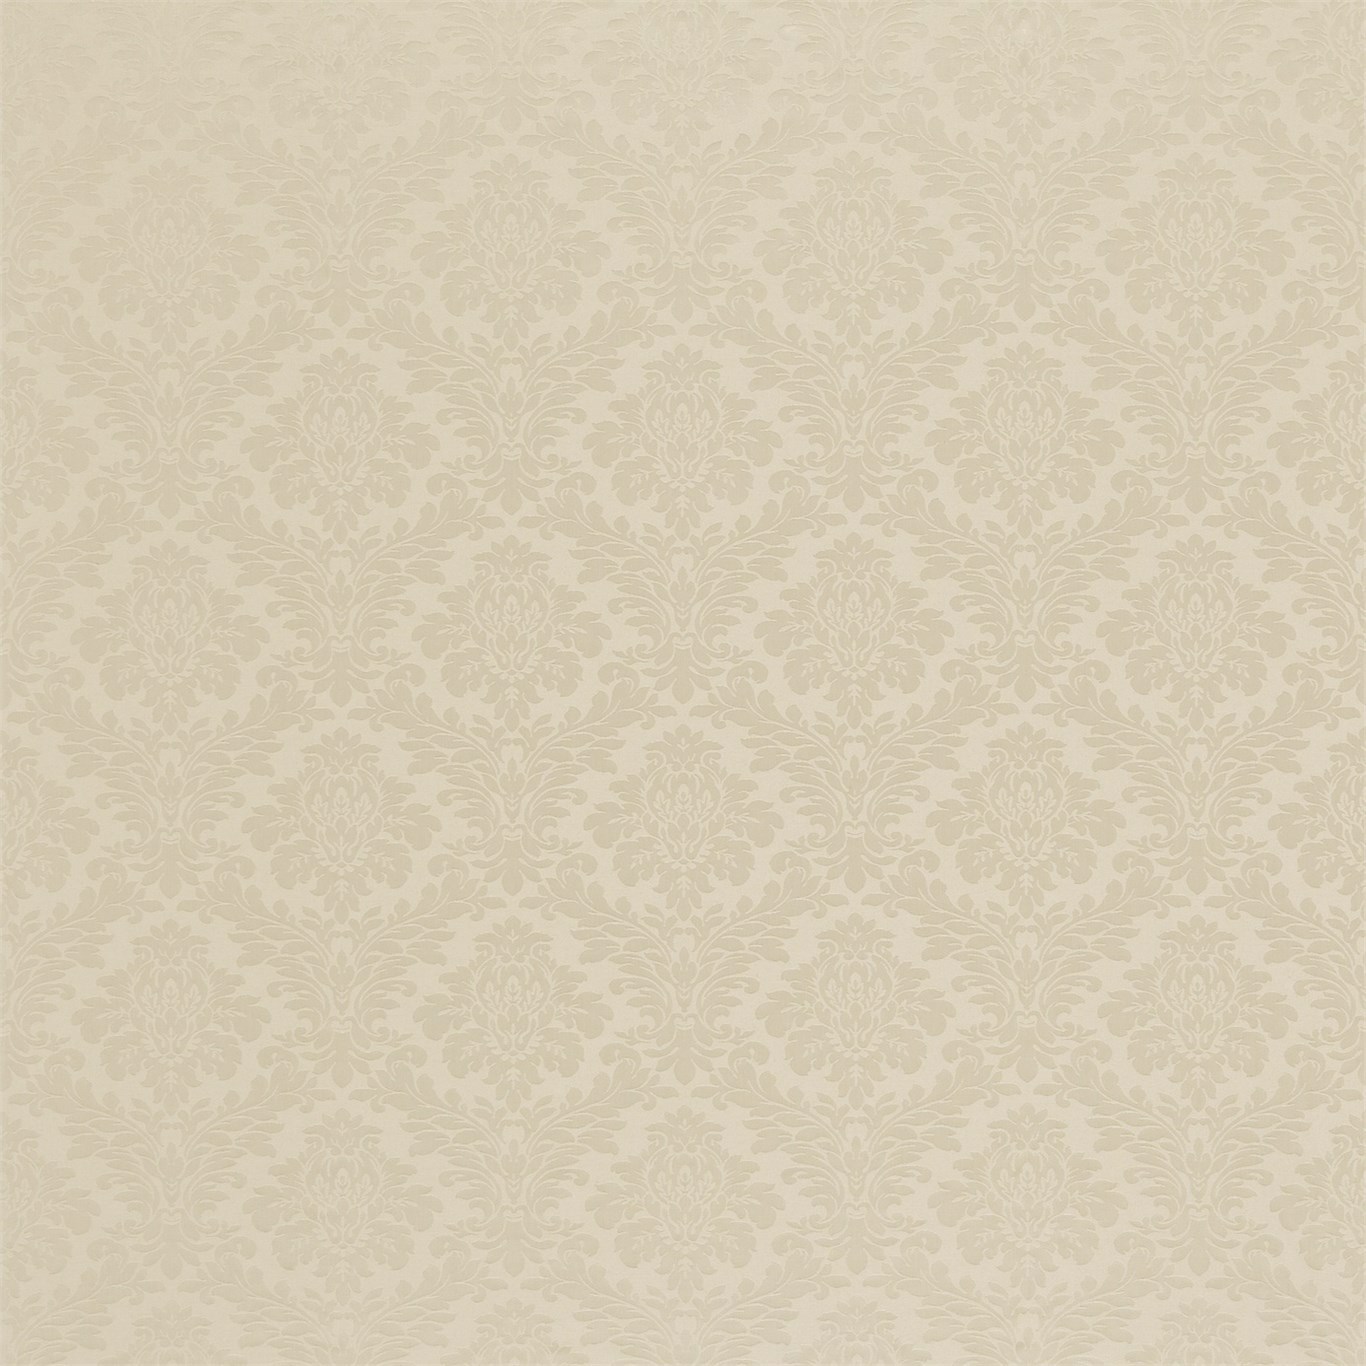 Lymington Damask Pale Linen Fabric by SAN